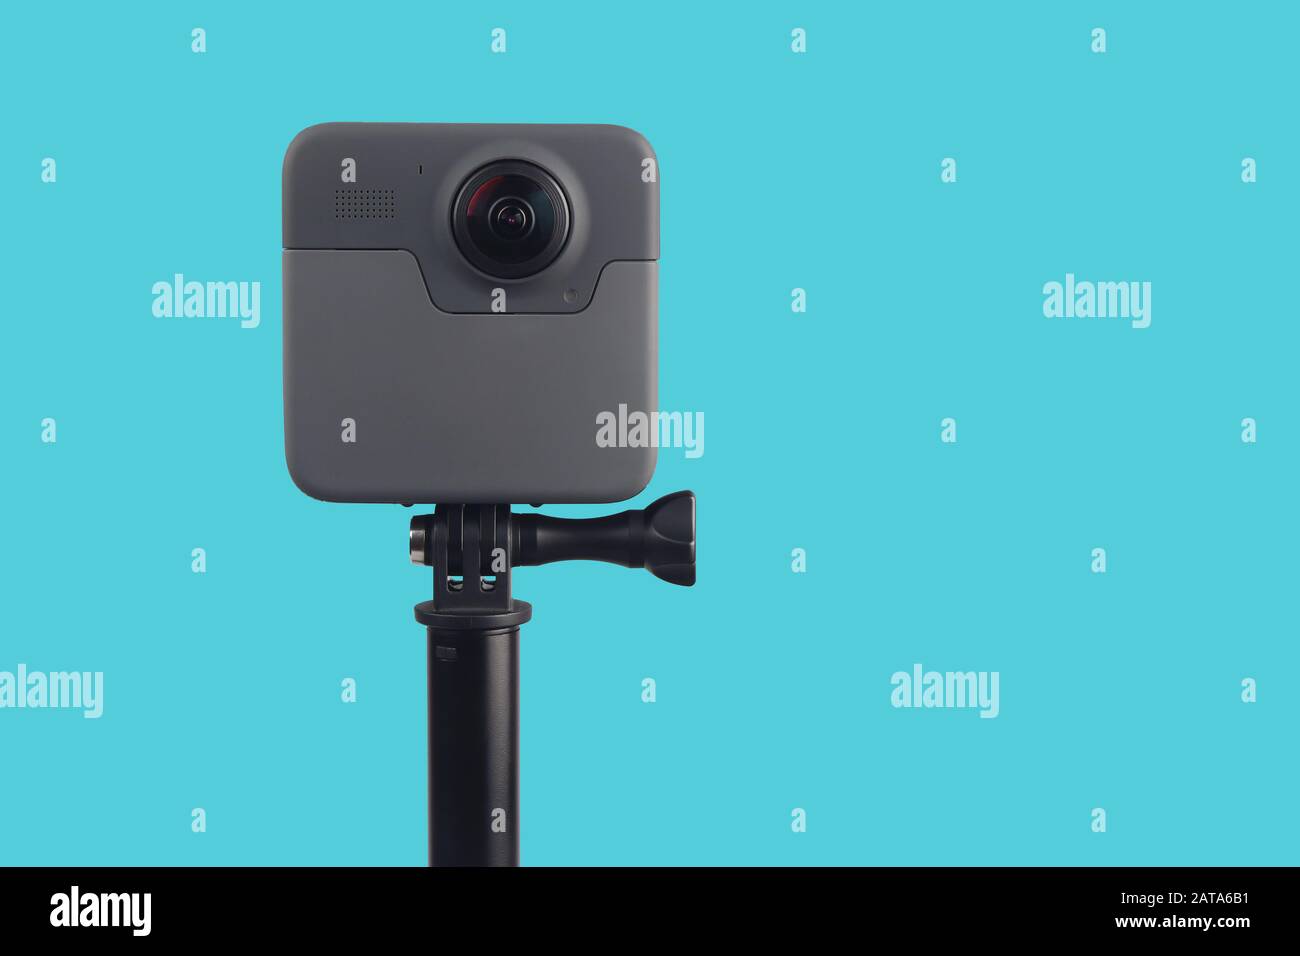 Moderna cámara digital de grados con soporte de stock - Alamy